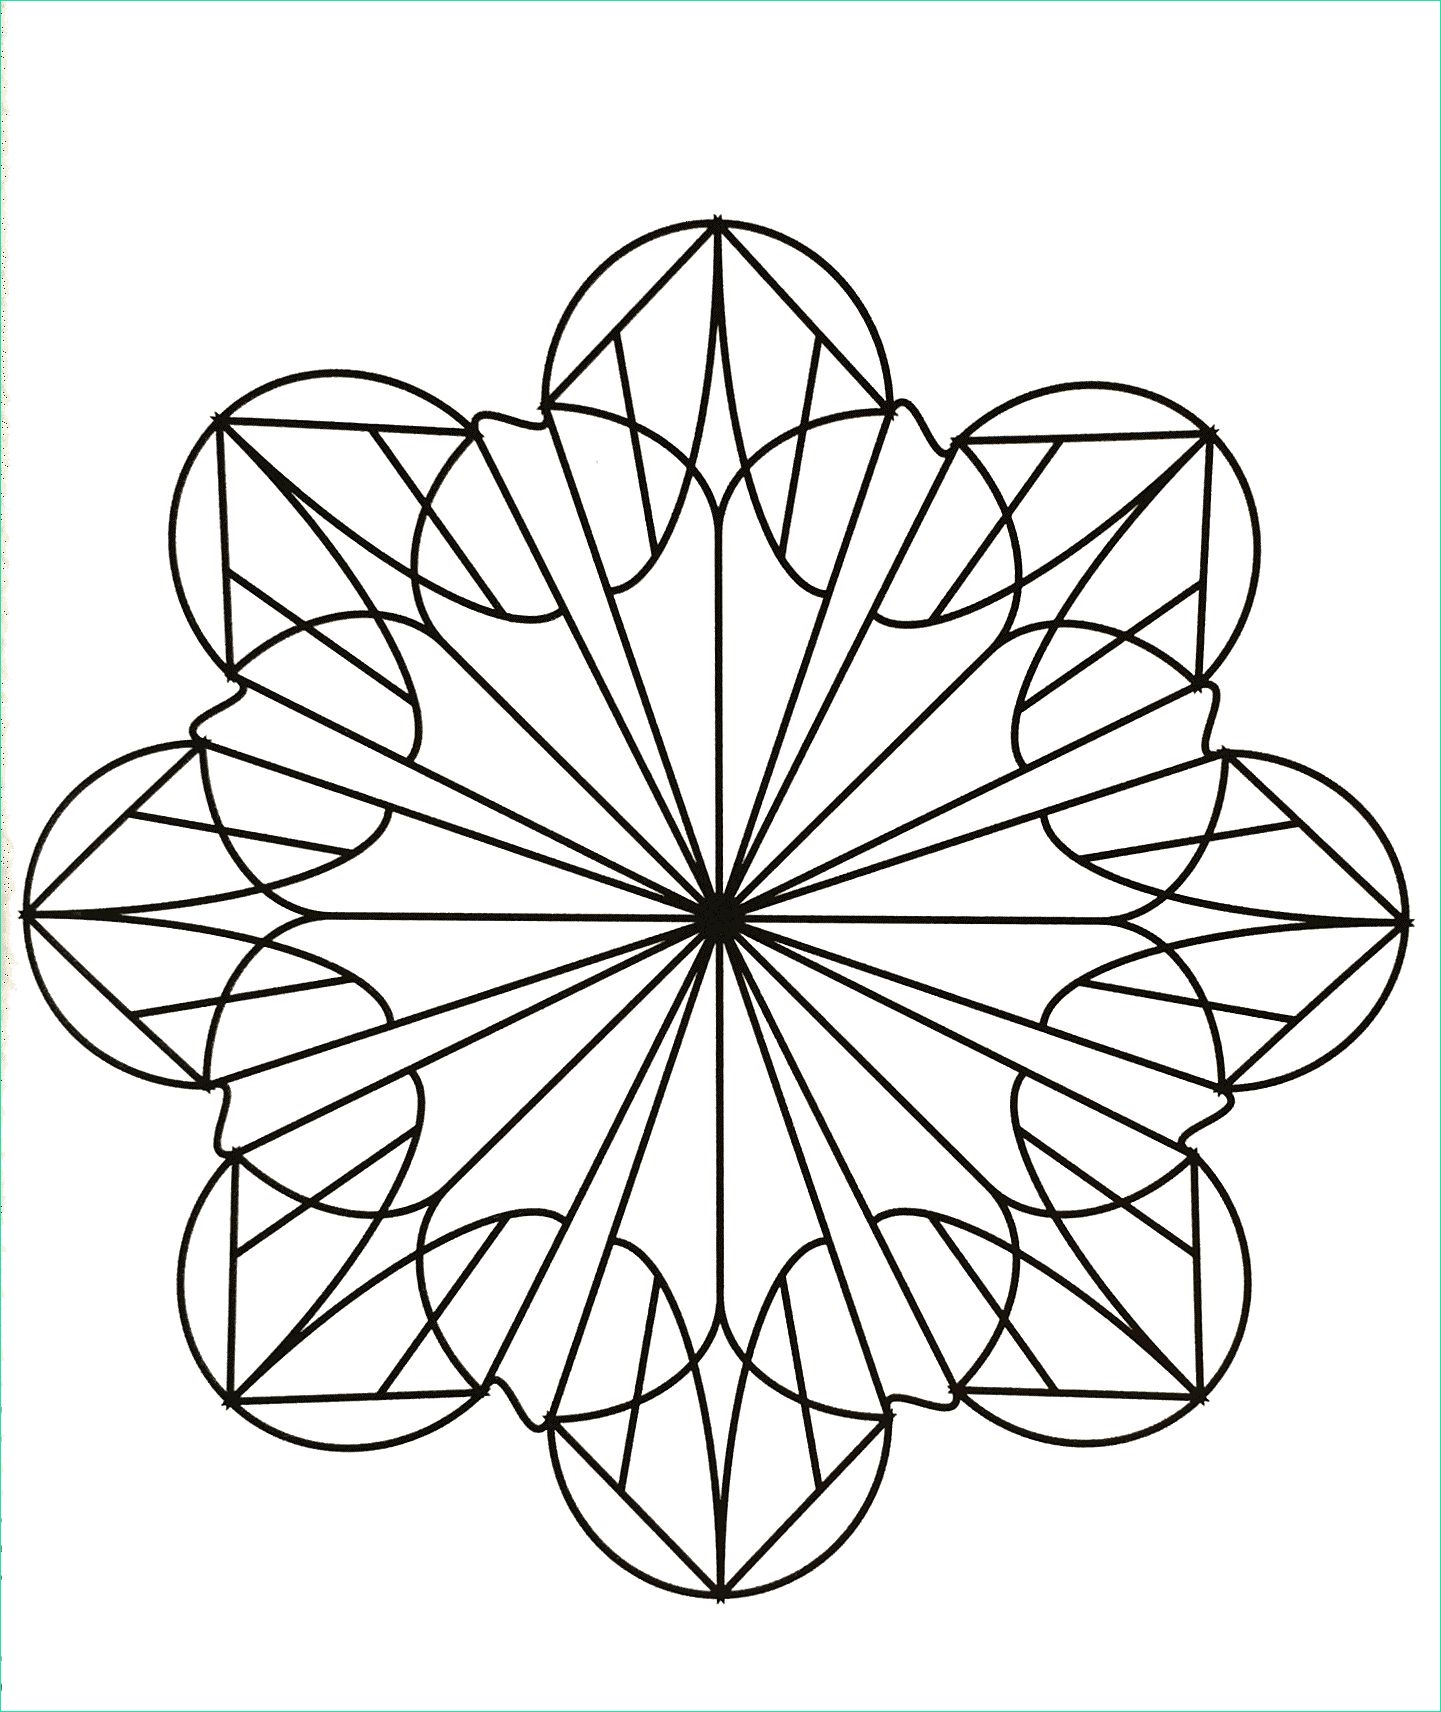 image=mandalas coloriage facile mandala fleur 3